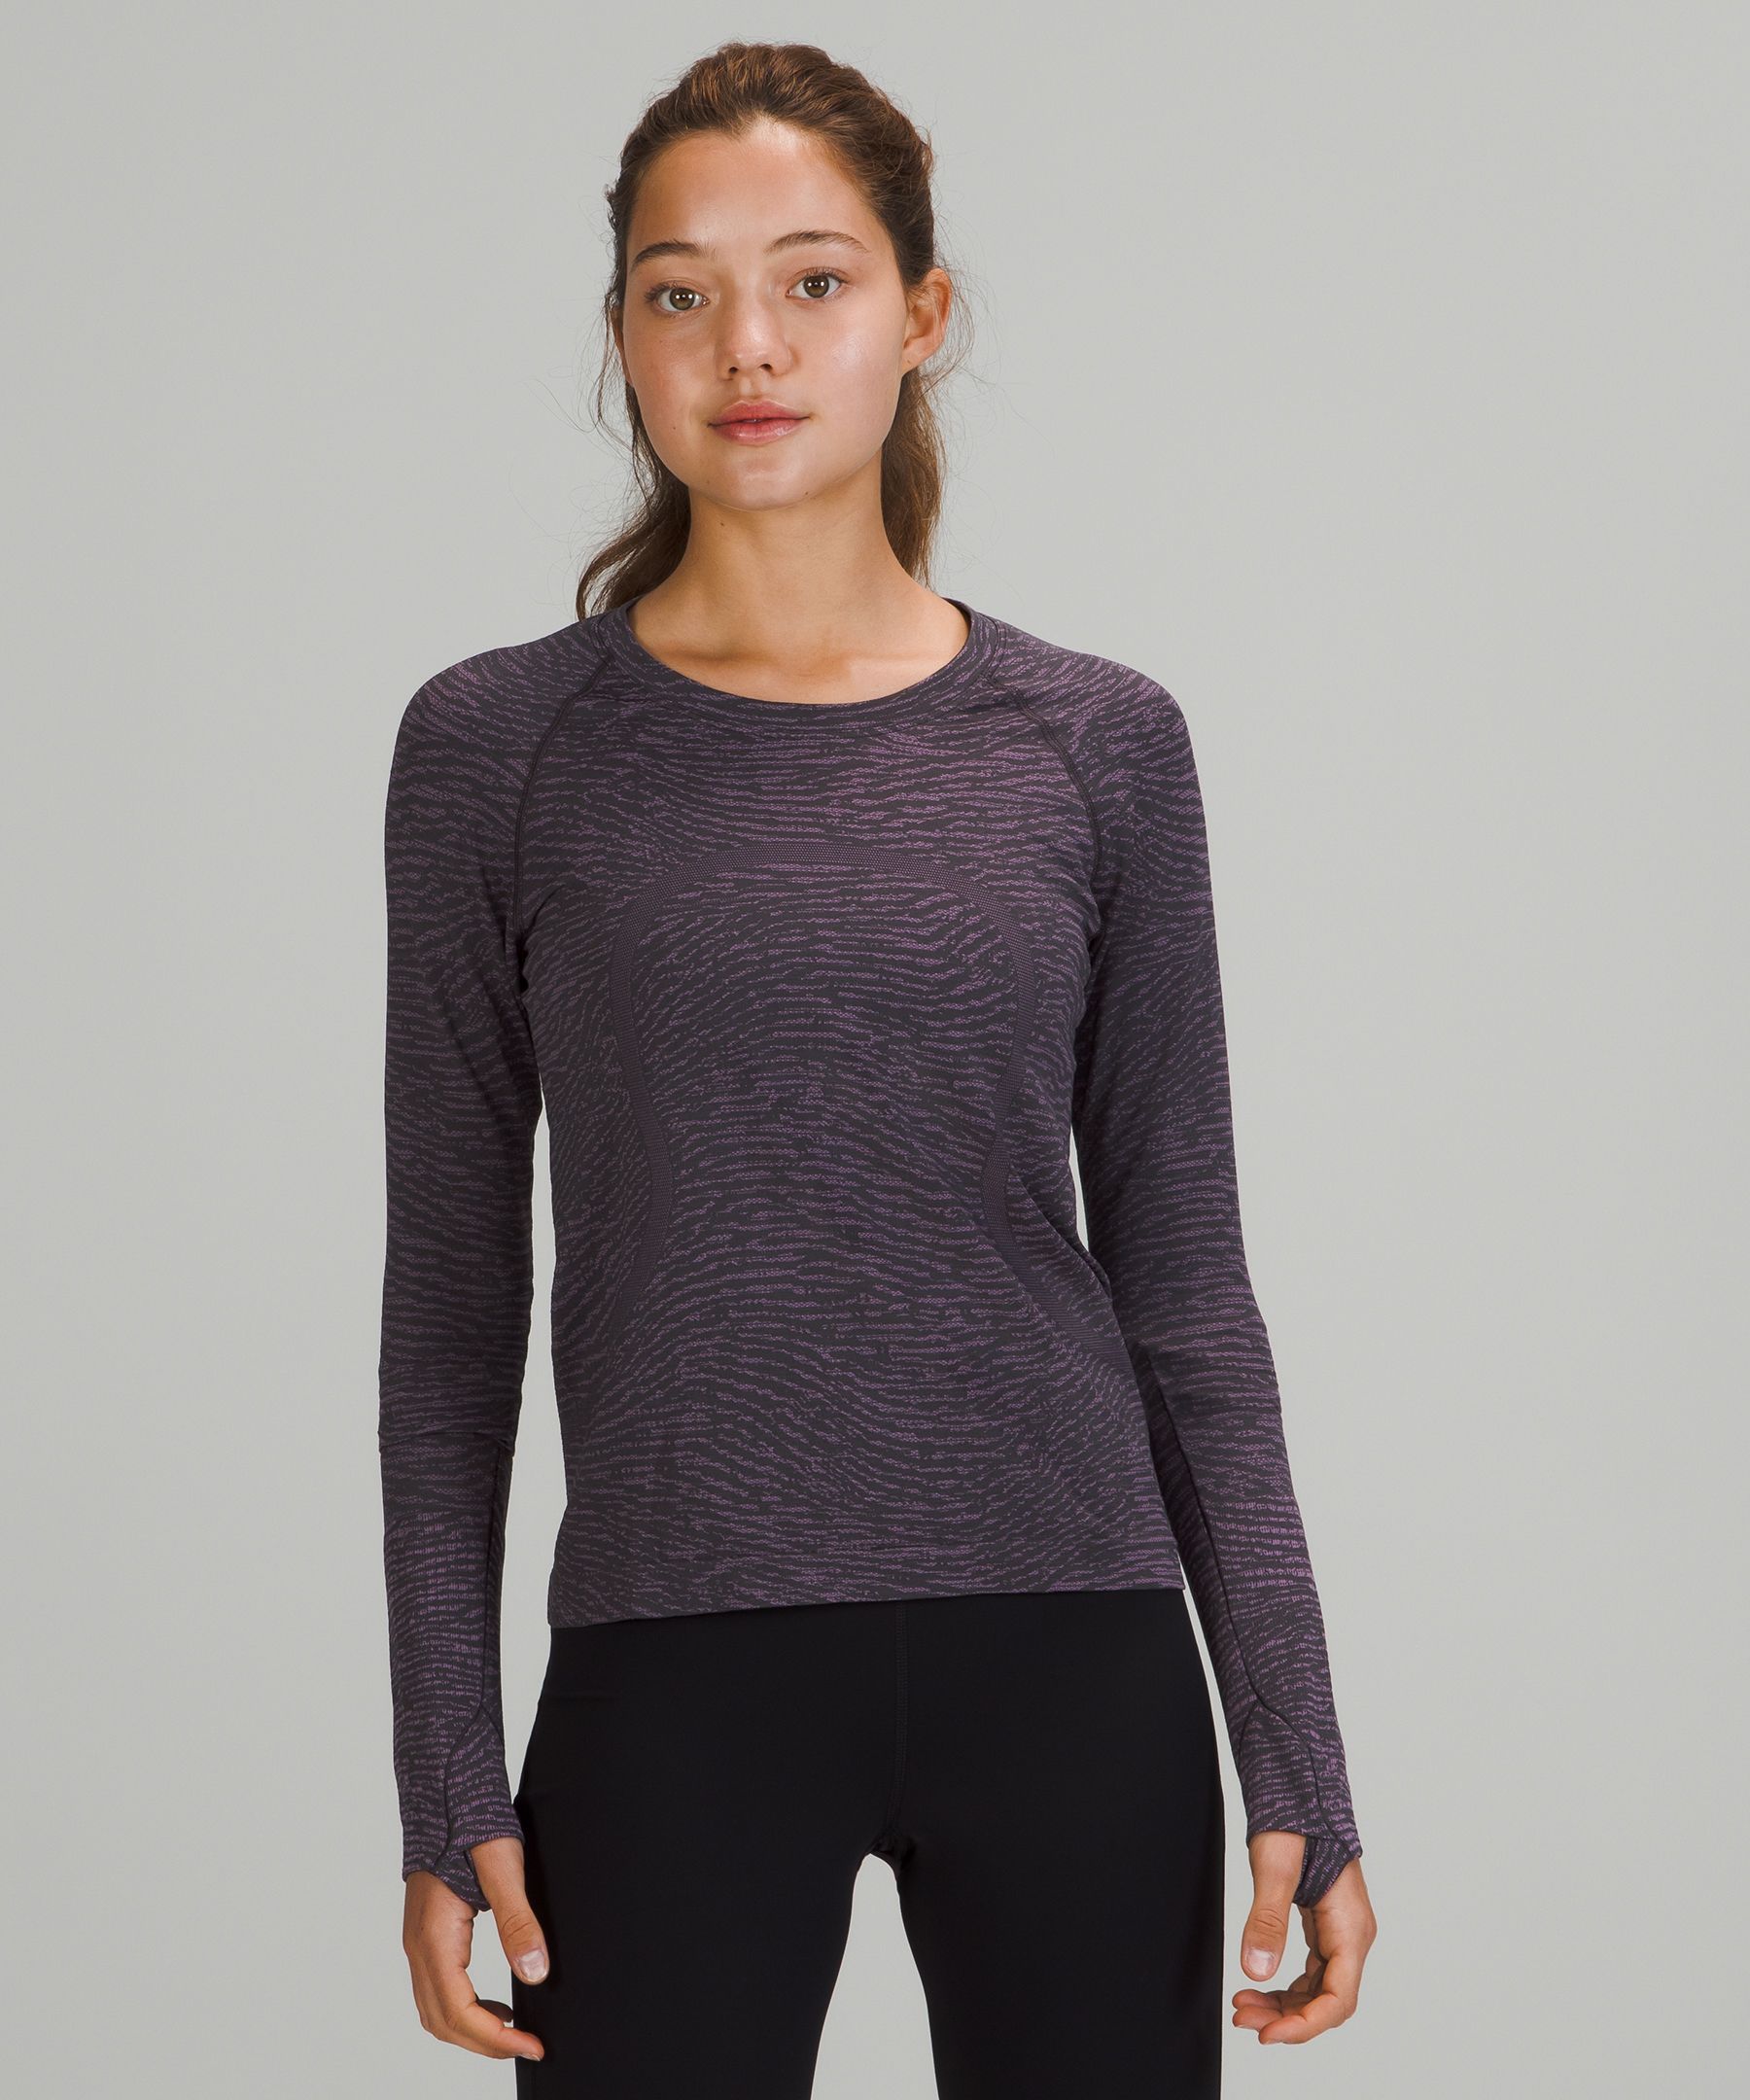 Lululemon Swiftly Tech Long Sleeve Shirt 2.0 Race Length In Water Surface Black Granite/wisteria Purple